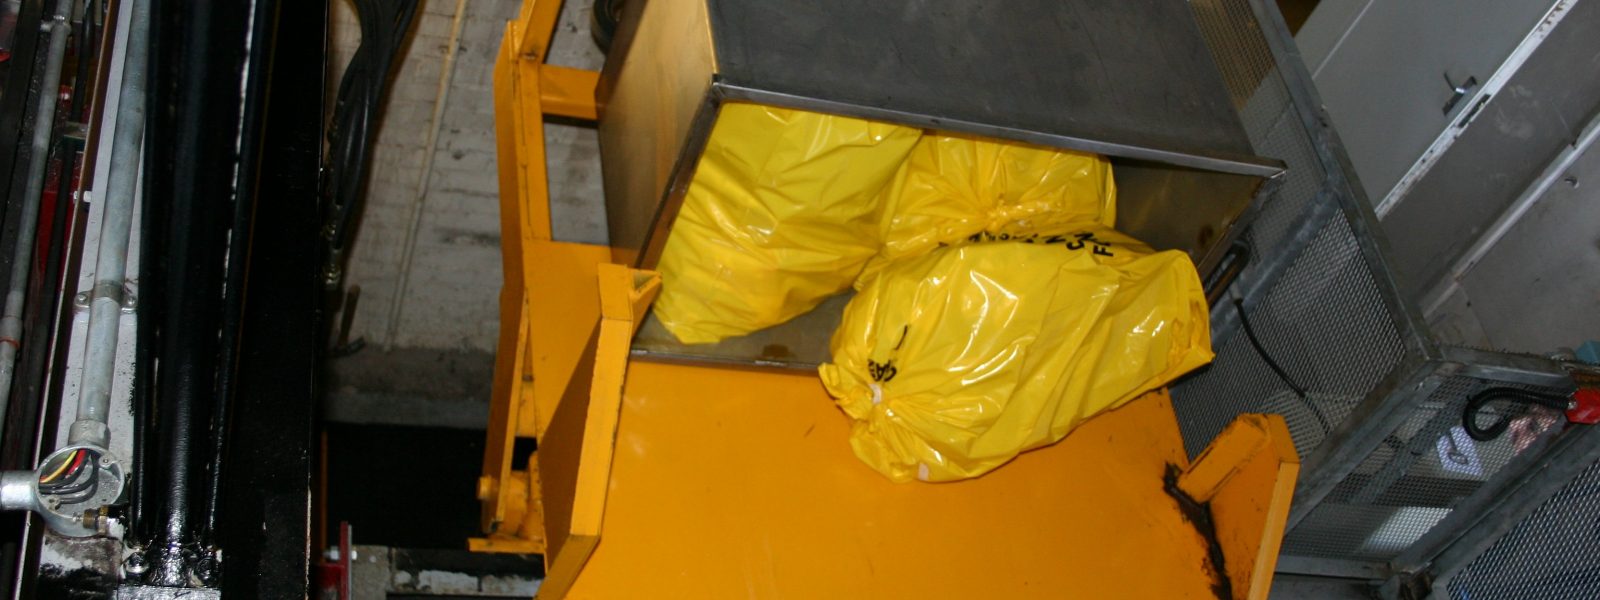 Yellow bag waste in a bin tipper